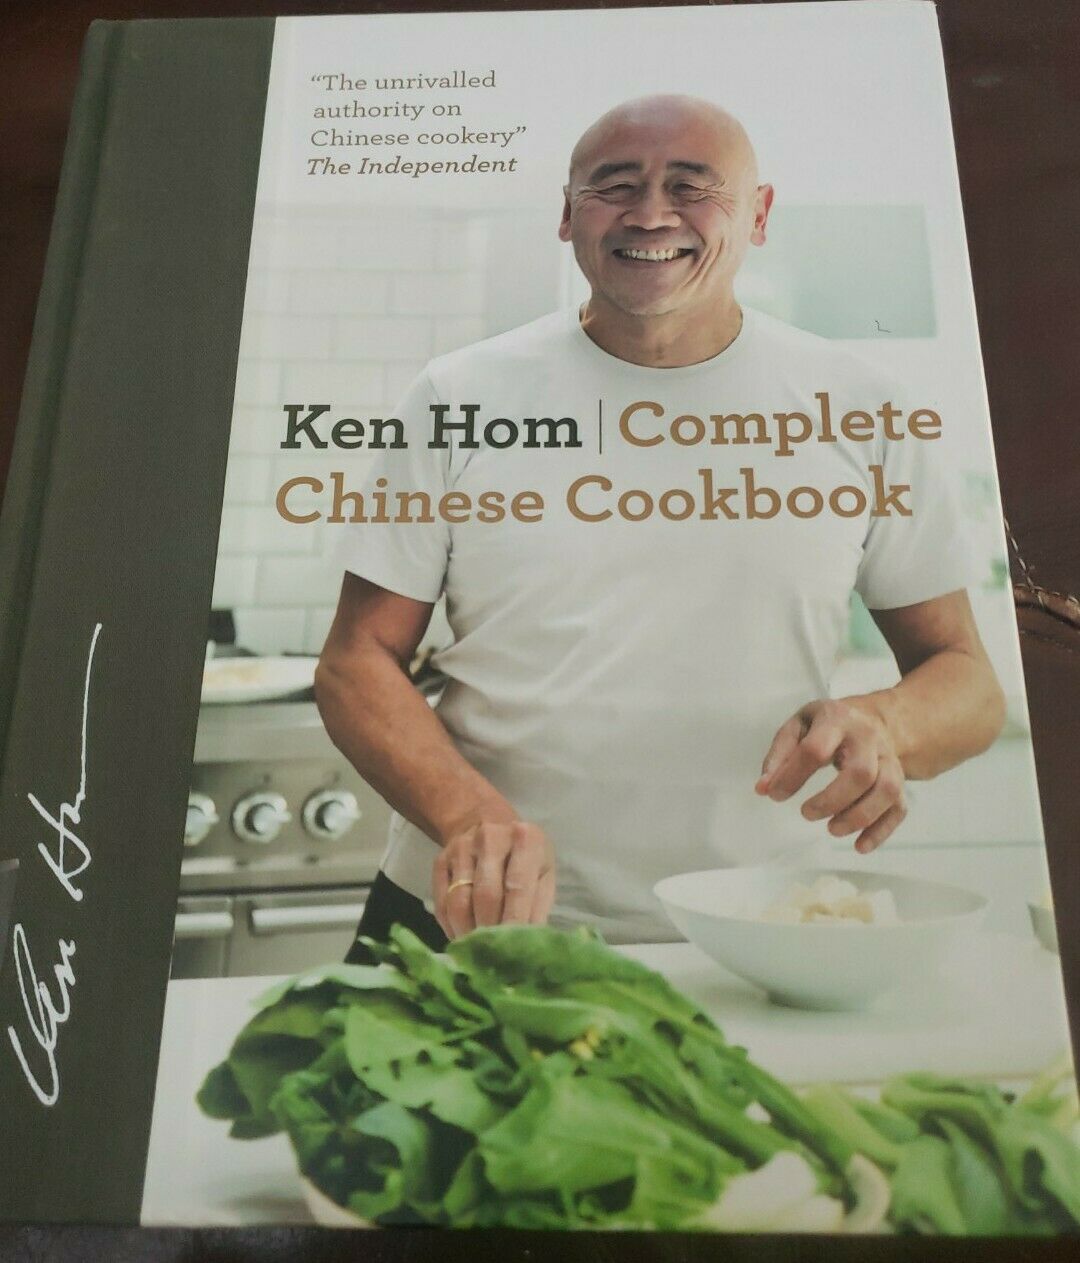 Chef Hom's cookbook cover